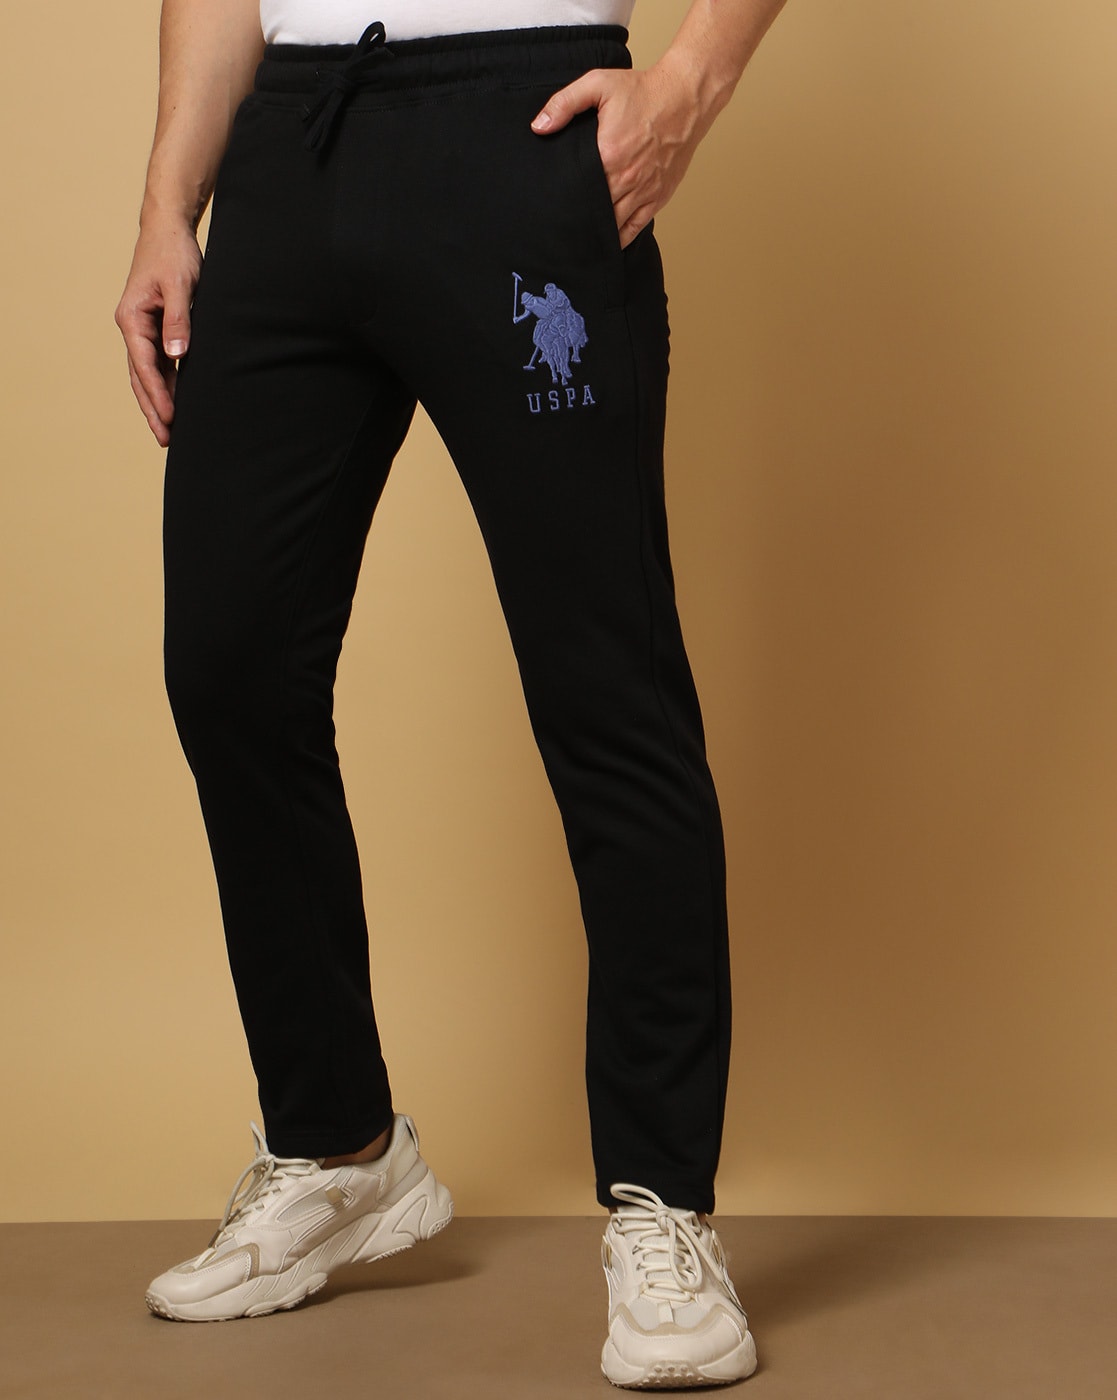 US Polo Assn Denim Co Trackpants  Buy US Polo Assn Denim Co  Collegiate Cotton Track Pants Online  Nykaa Fashion